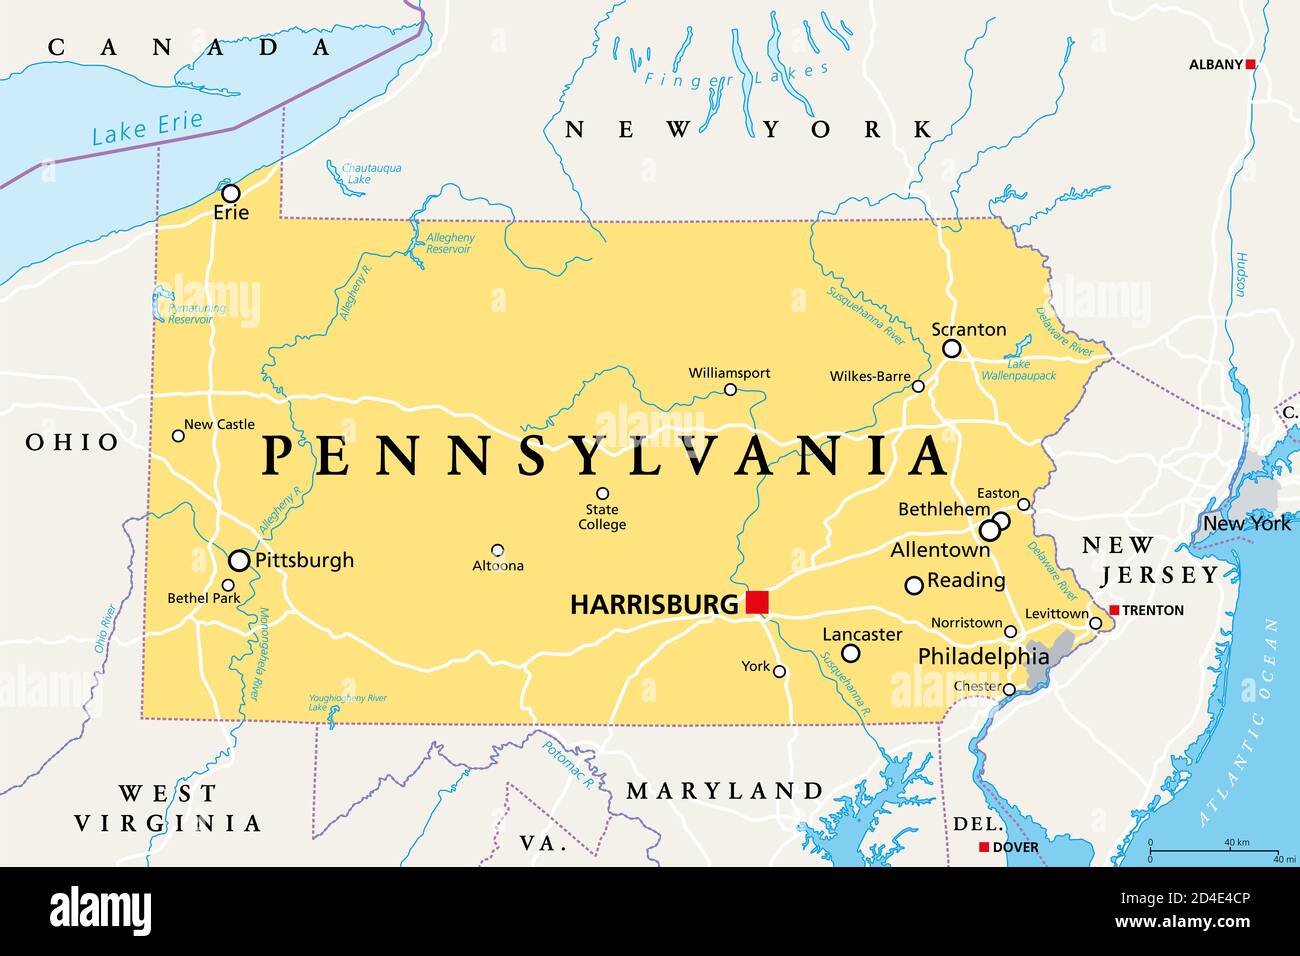 Pennsylvania Map Immagini e Fotos Stock - Alamy